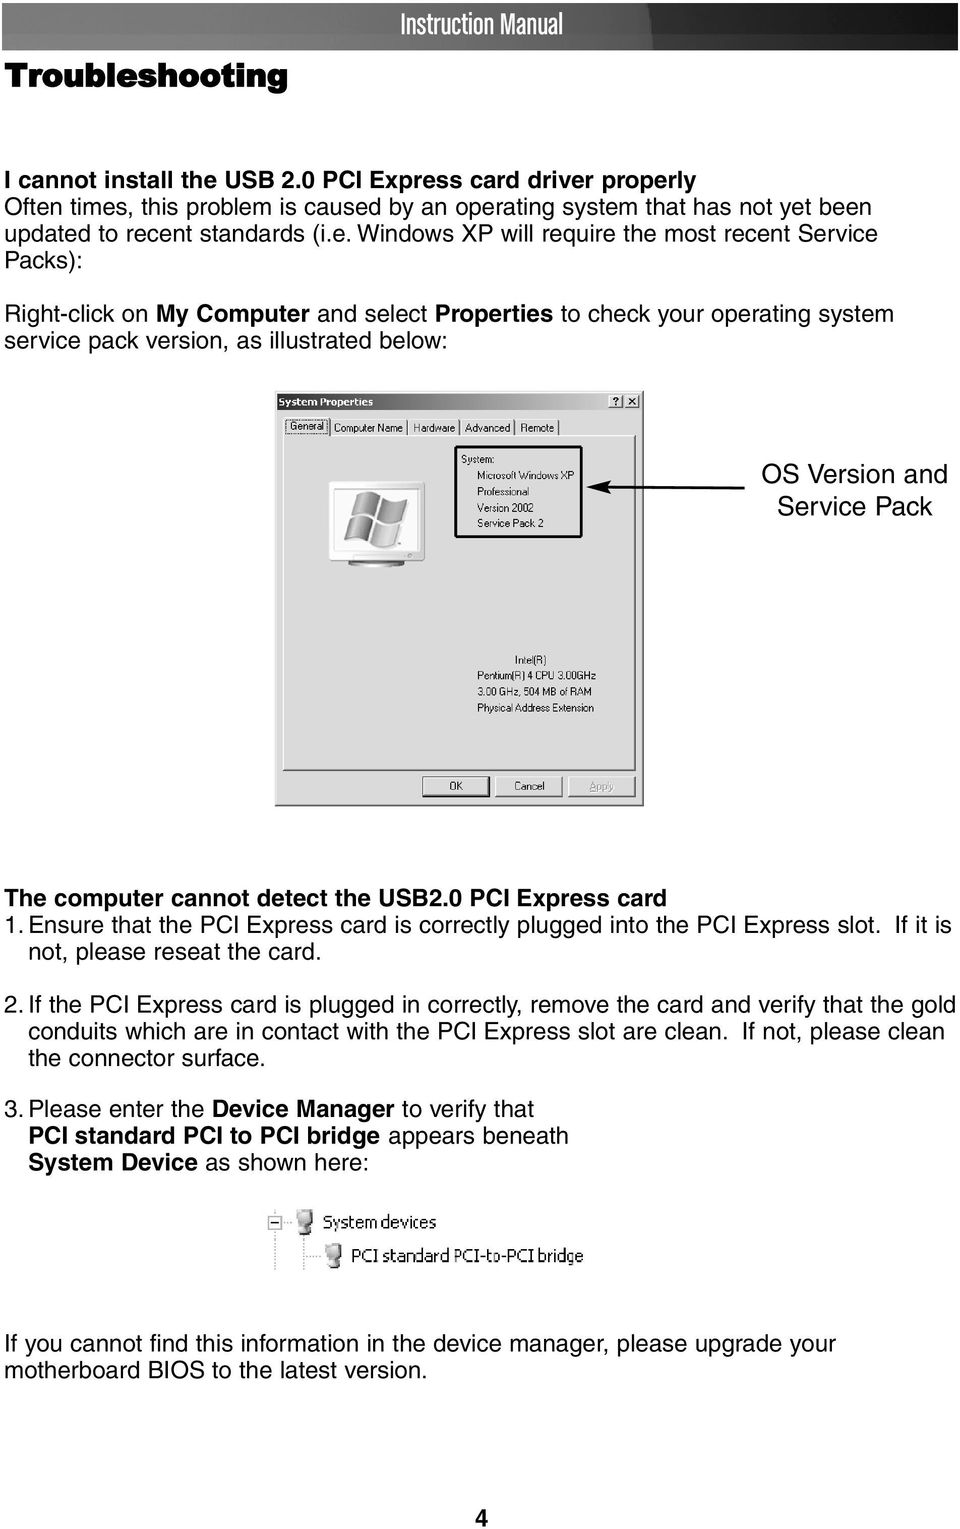 USB 2.0 PCI Expres